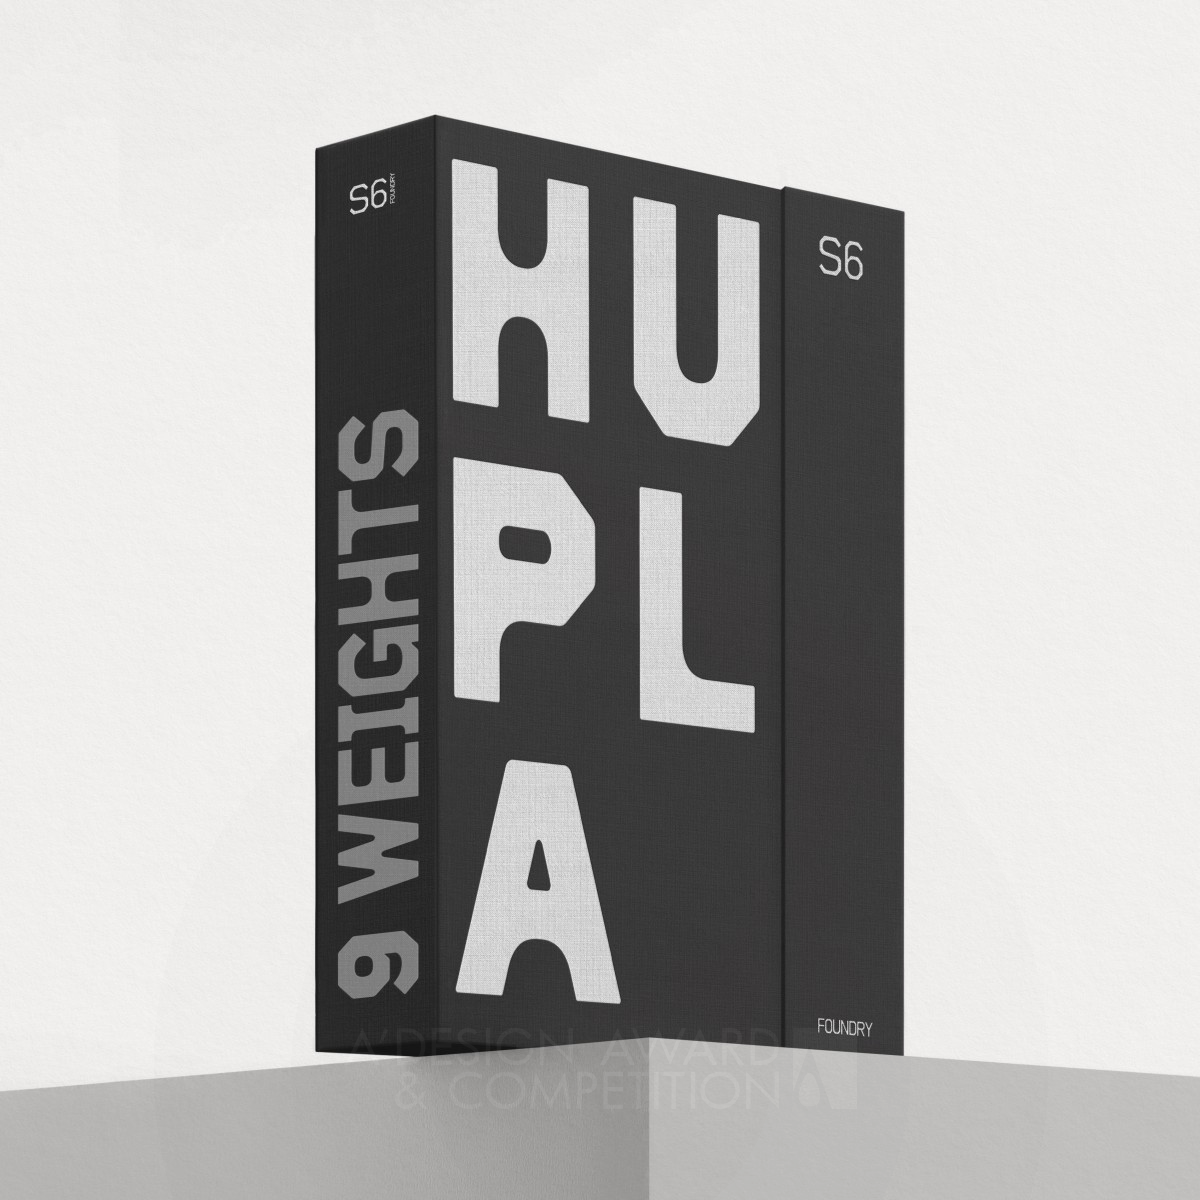 Hupla Typeface  Type Design And Type Specimen